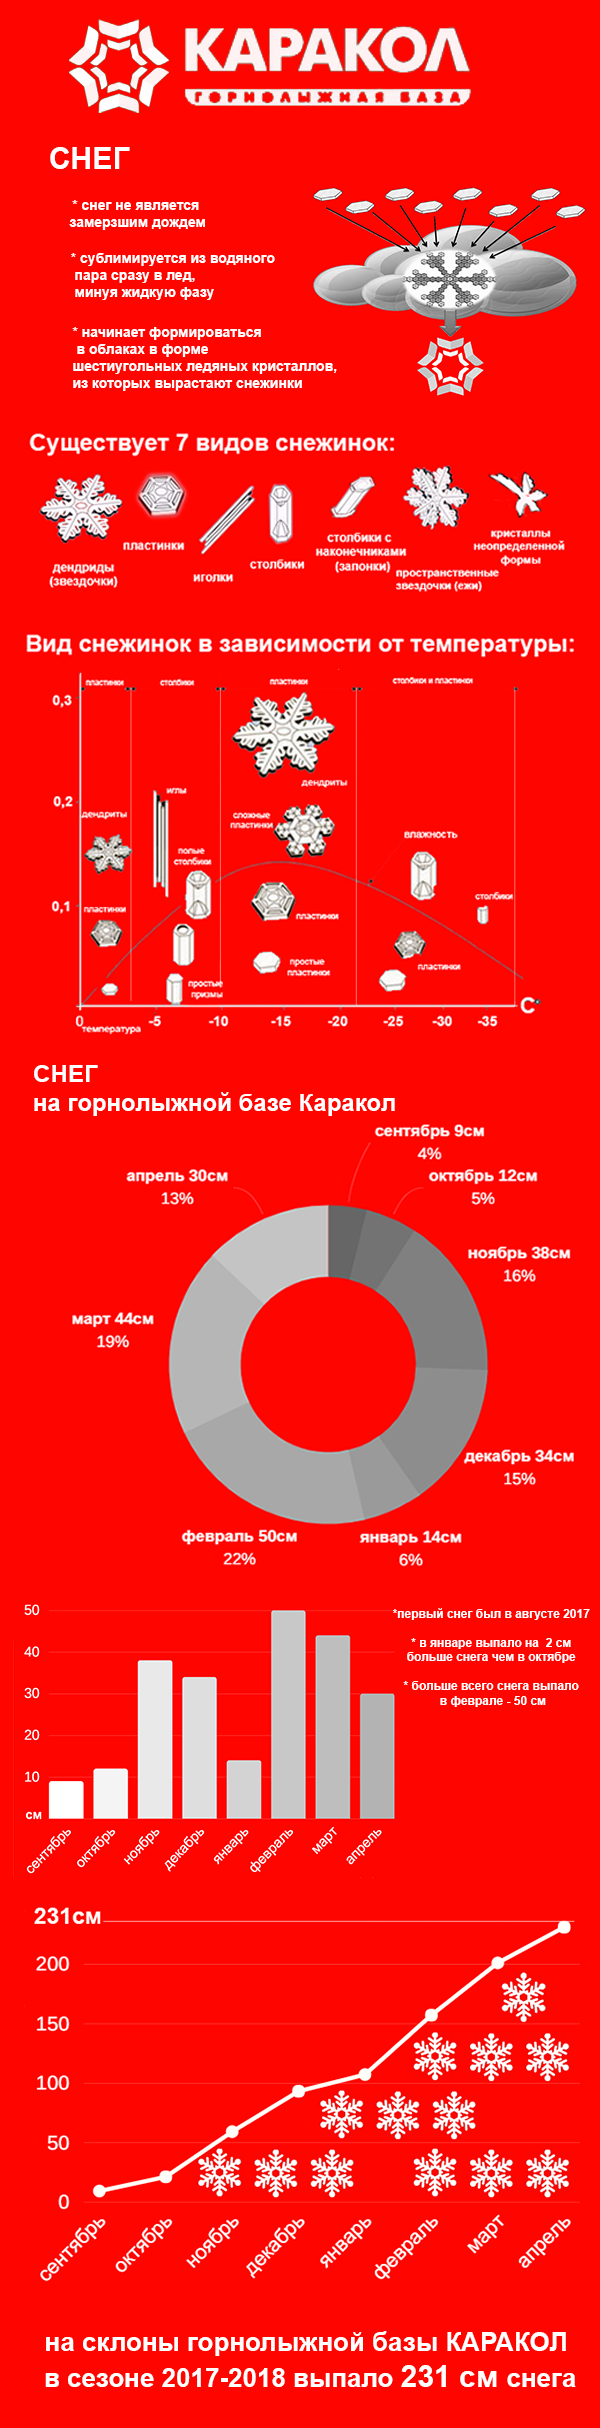 Инфографика Каракол 2017-2018